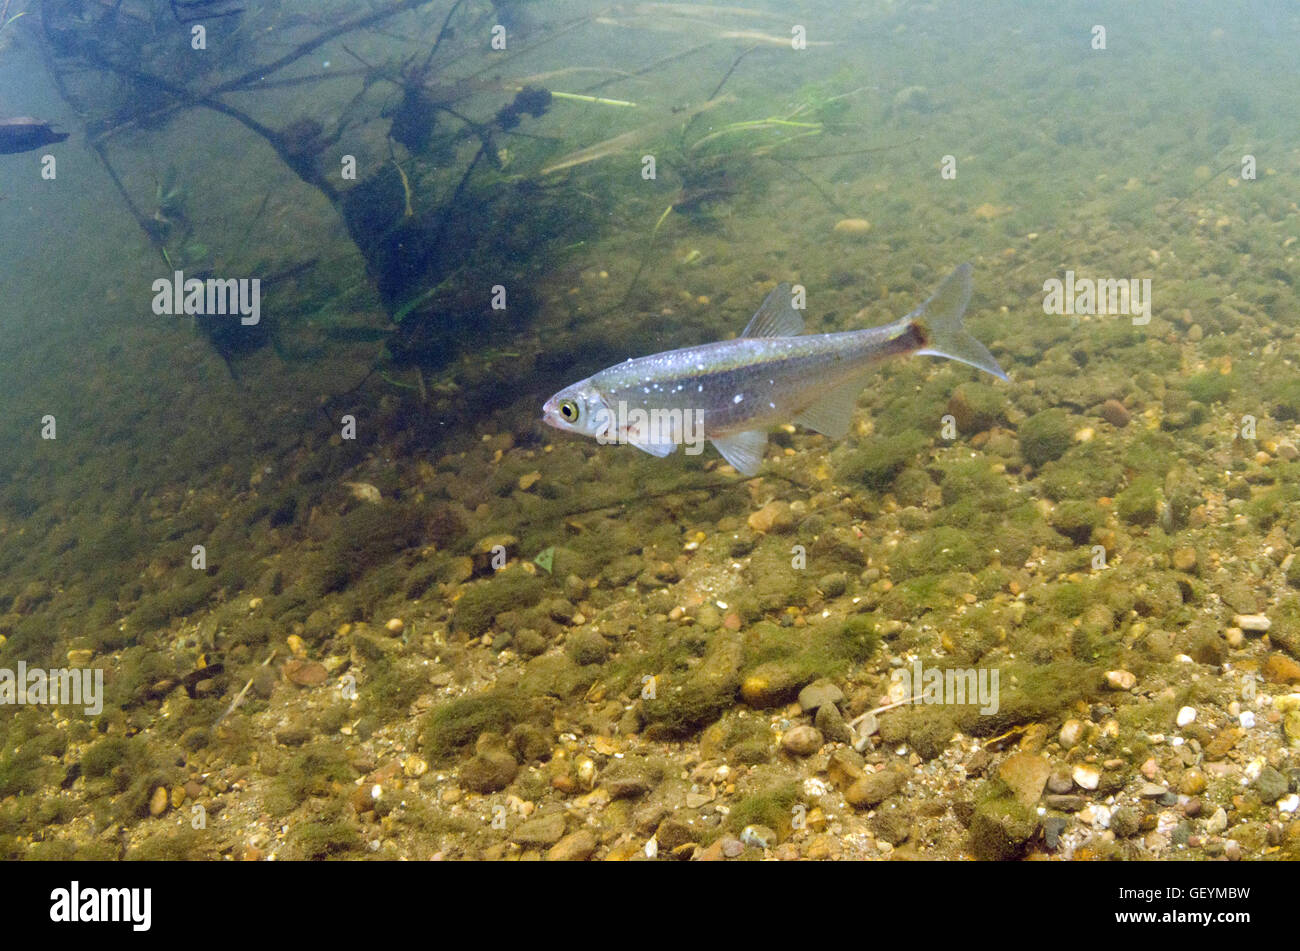 Common Bleak Underwater, UK Stock Photo